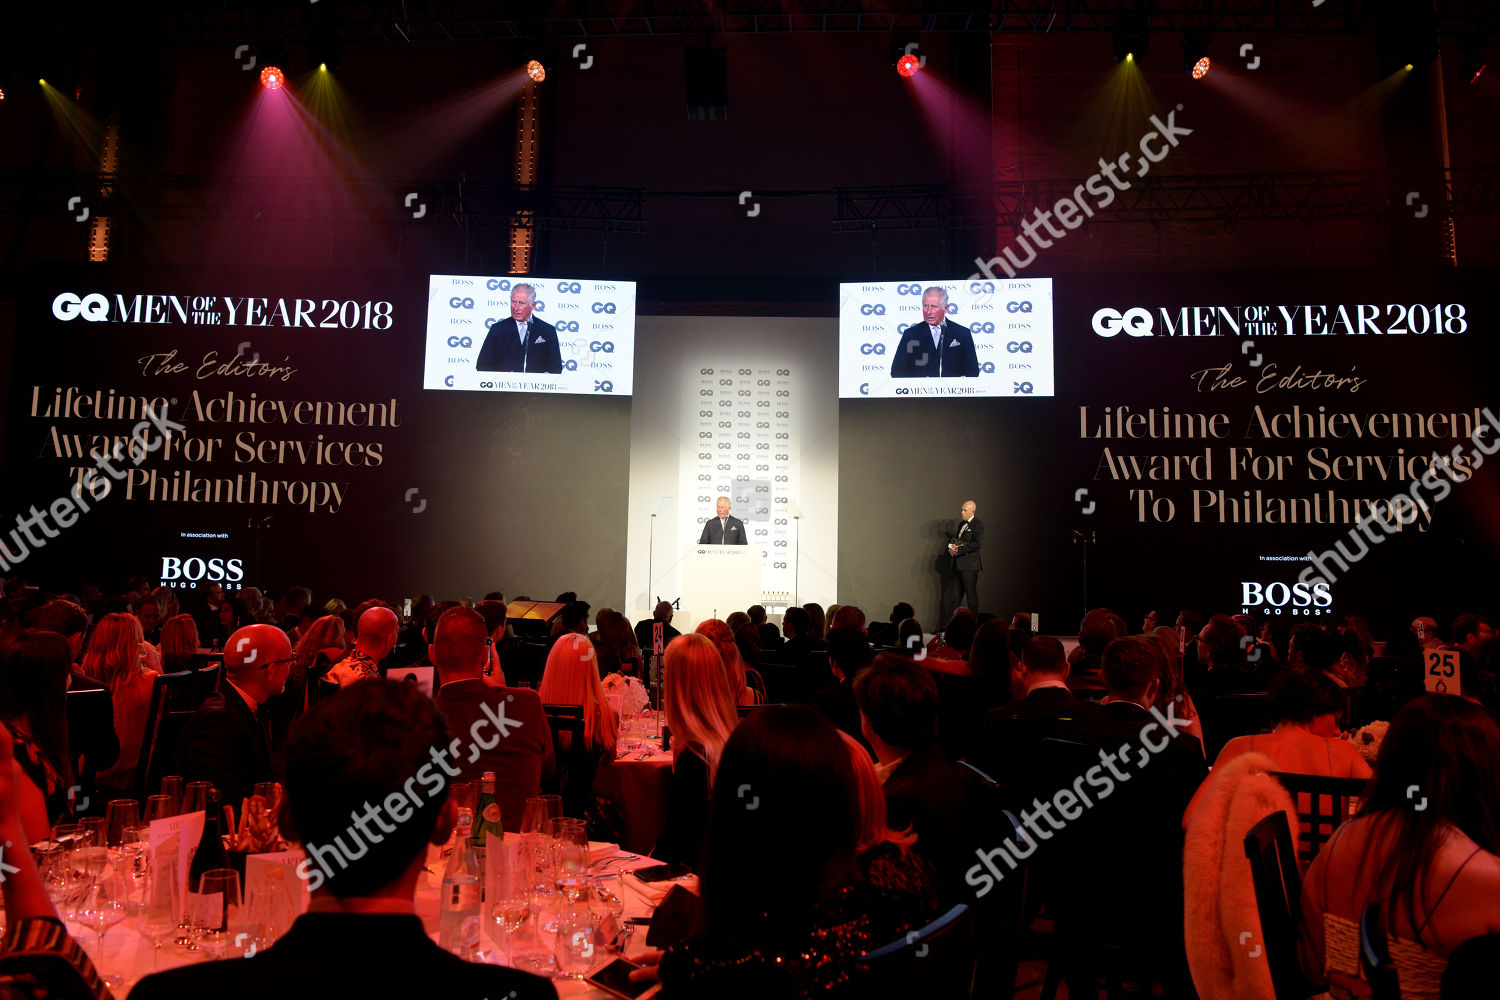 gq-men-of-the-year-awards-dinner-and-awards-tate-modern-london-uk-shutterstock-editorial-9865647aa.jpg